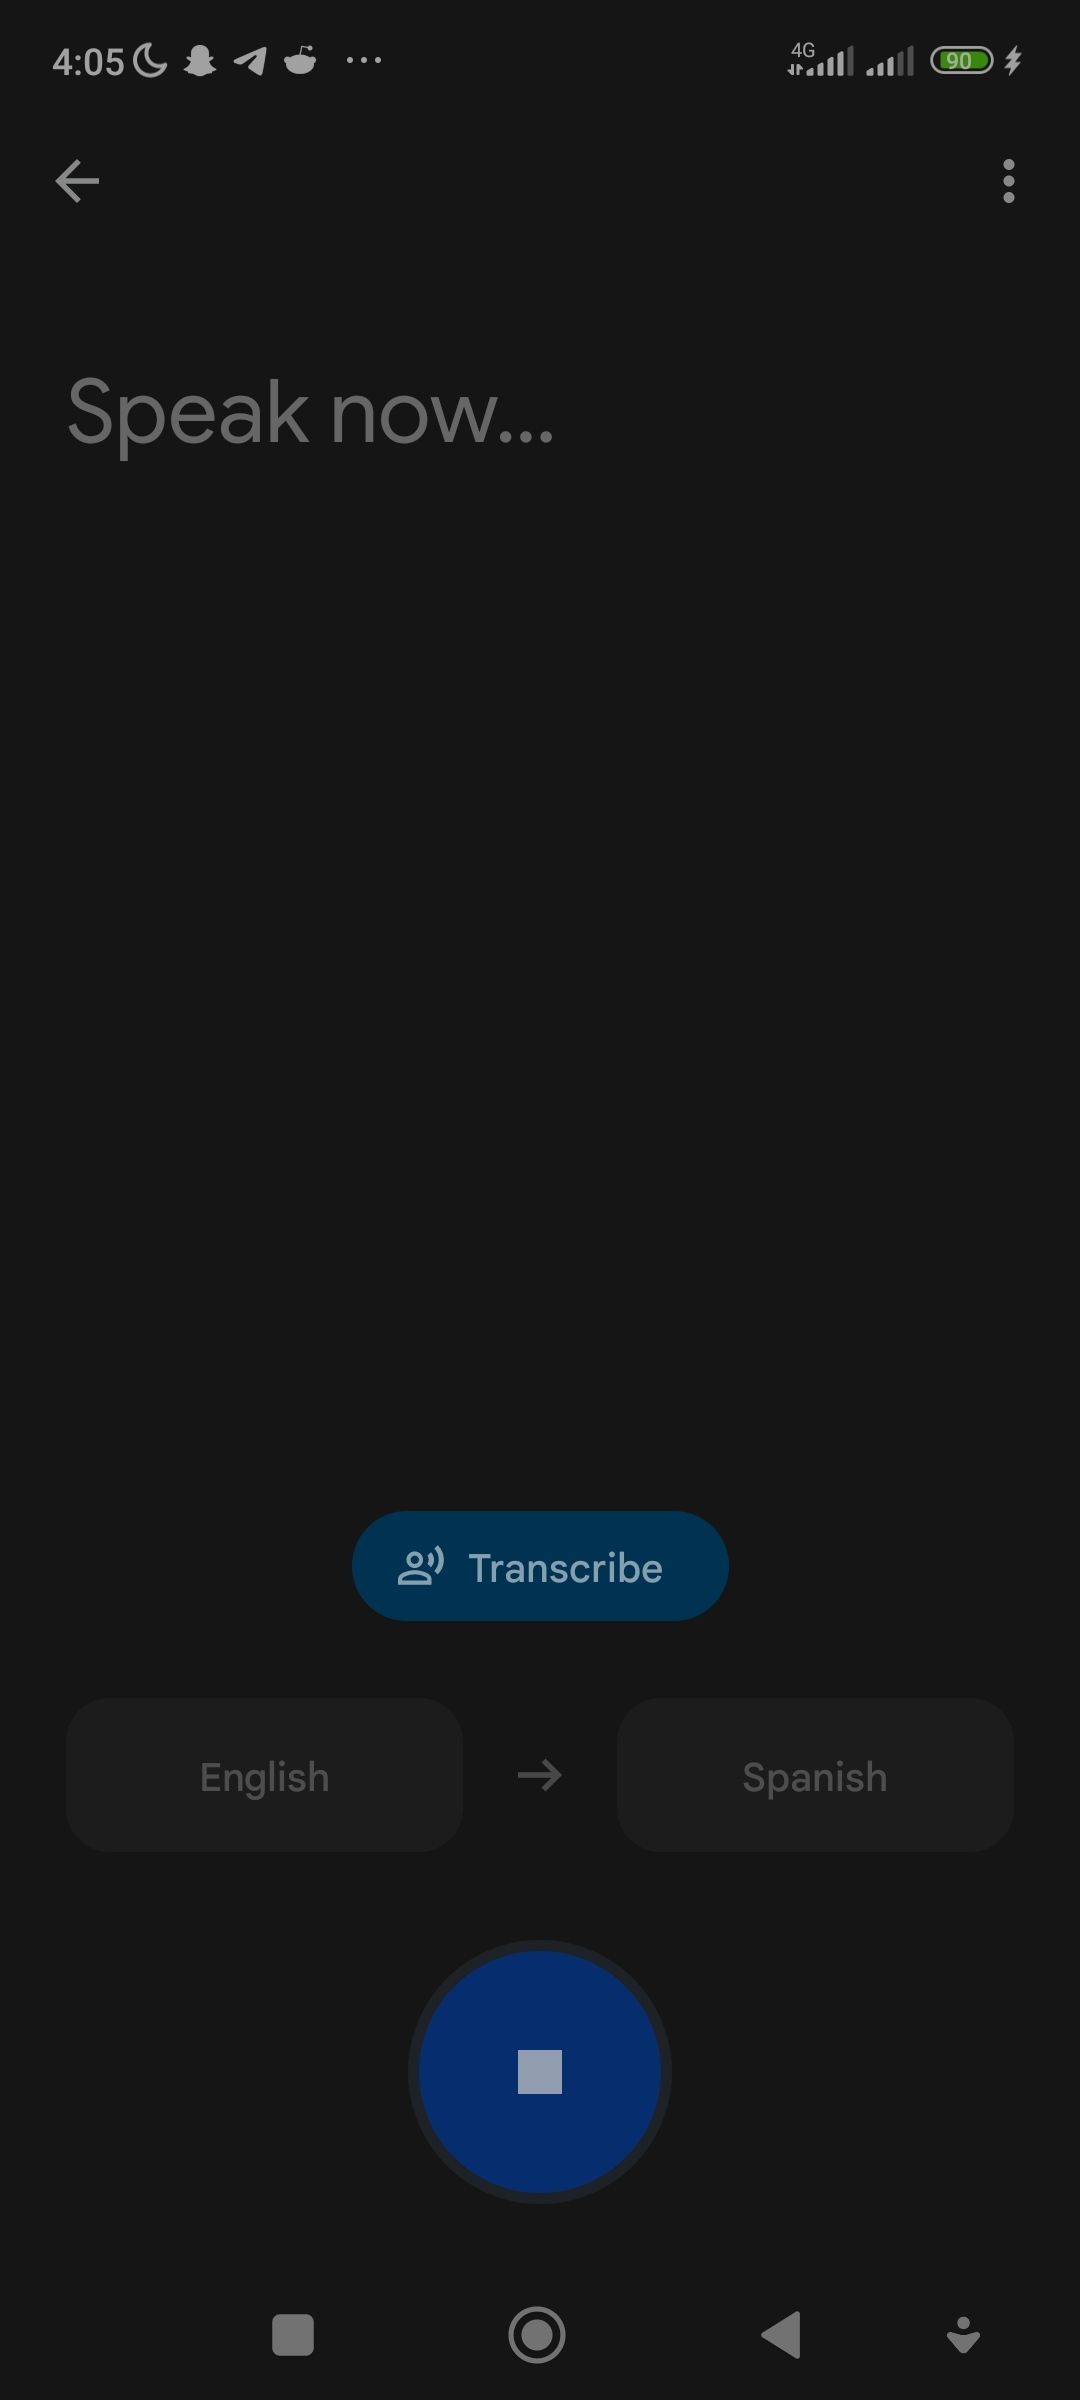 Transcribe button on the Google Translate app